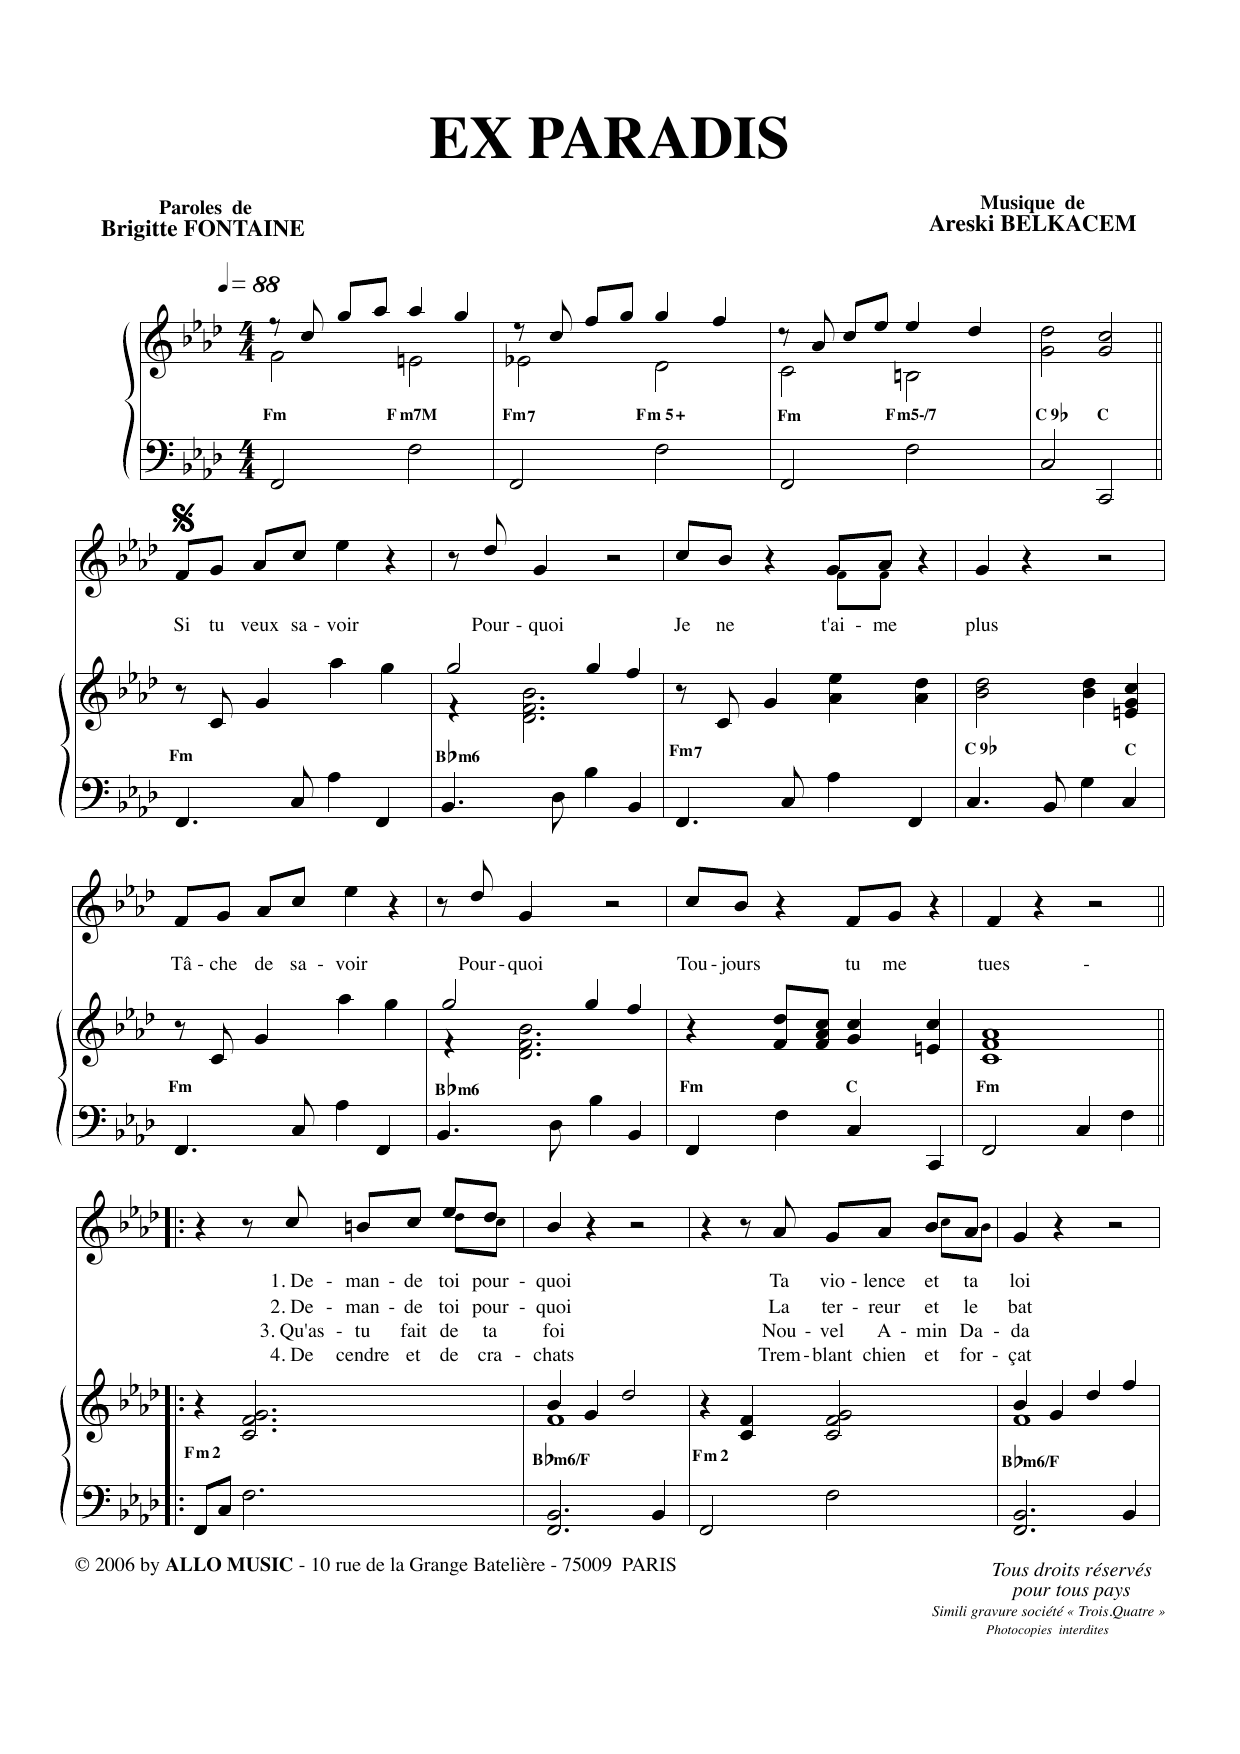 Brigitte Fontaine & Areski Belkacem Exparadis Sheet Music Notes & Chords for Piano & Vocal - Download or Print PDF